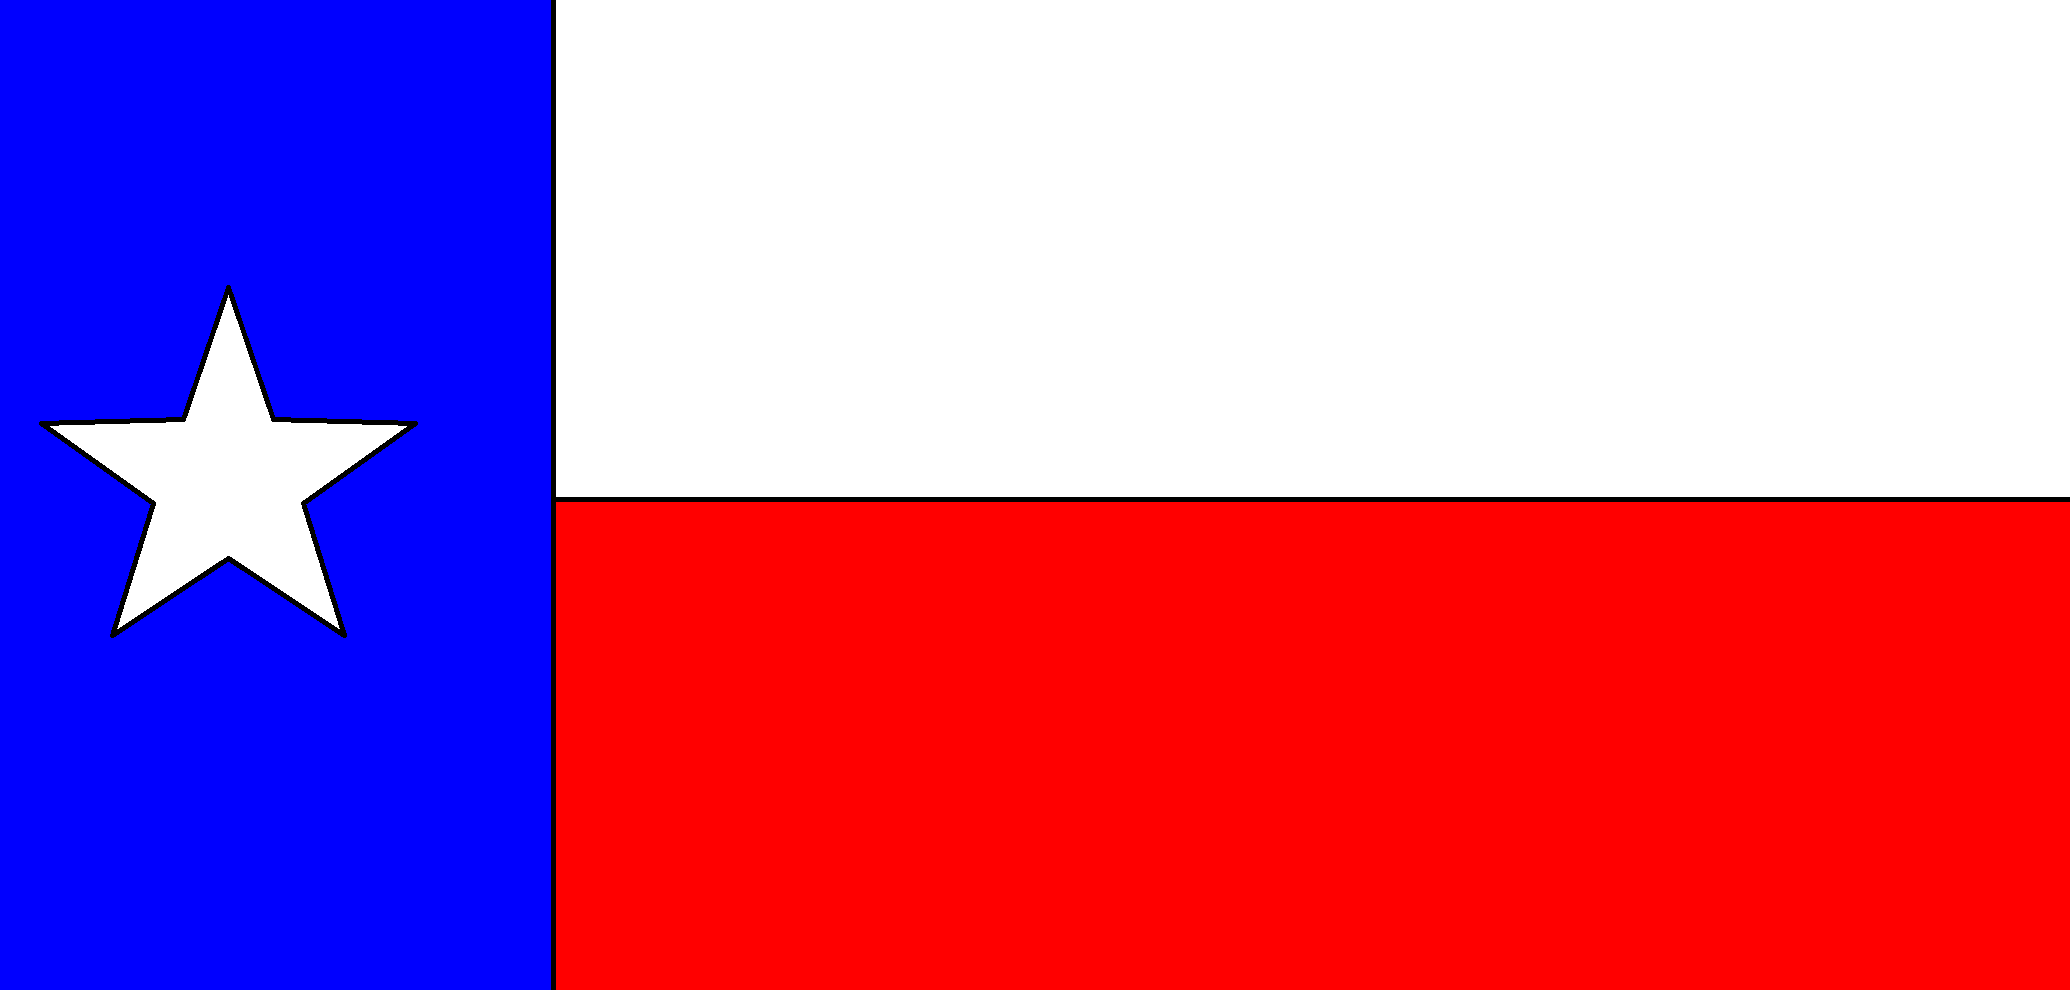 flag texas background free wallpaper   Quotekocom